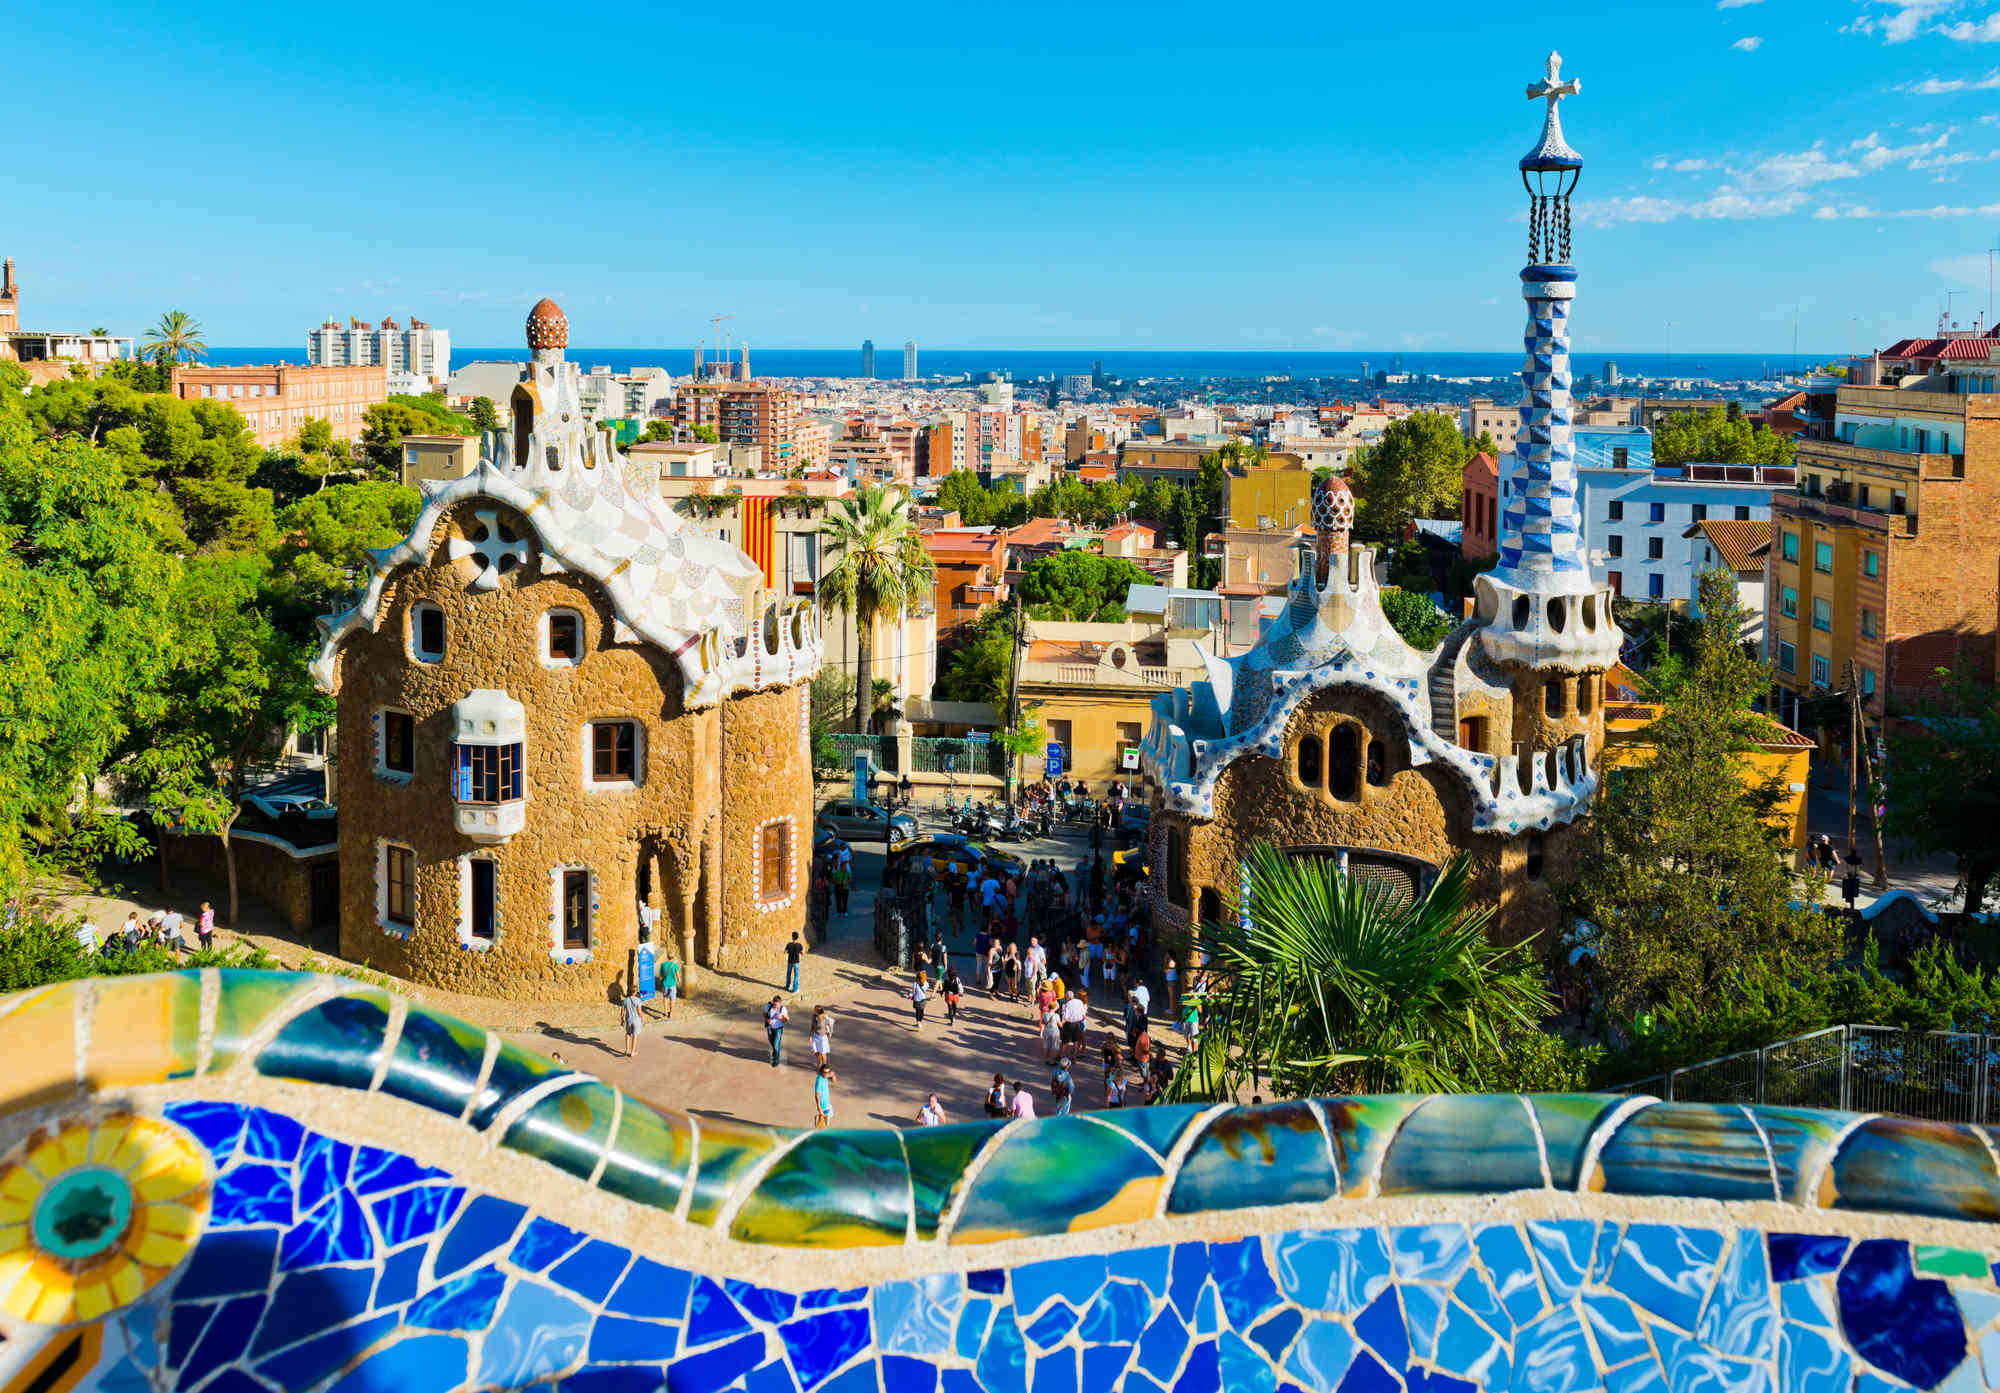 The breathtaking architecture of Gaudi in Barcelona